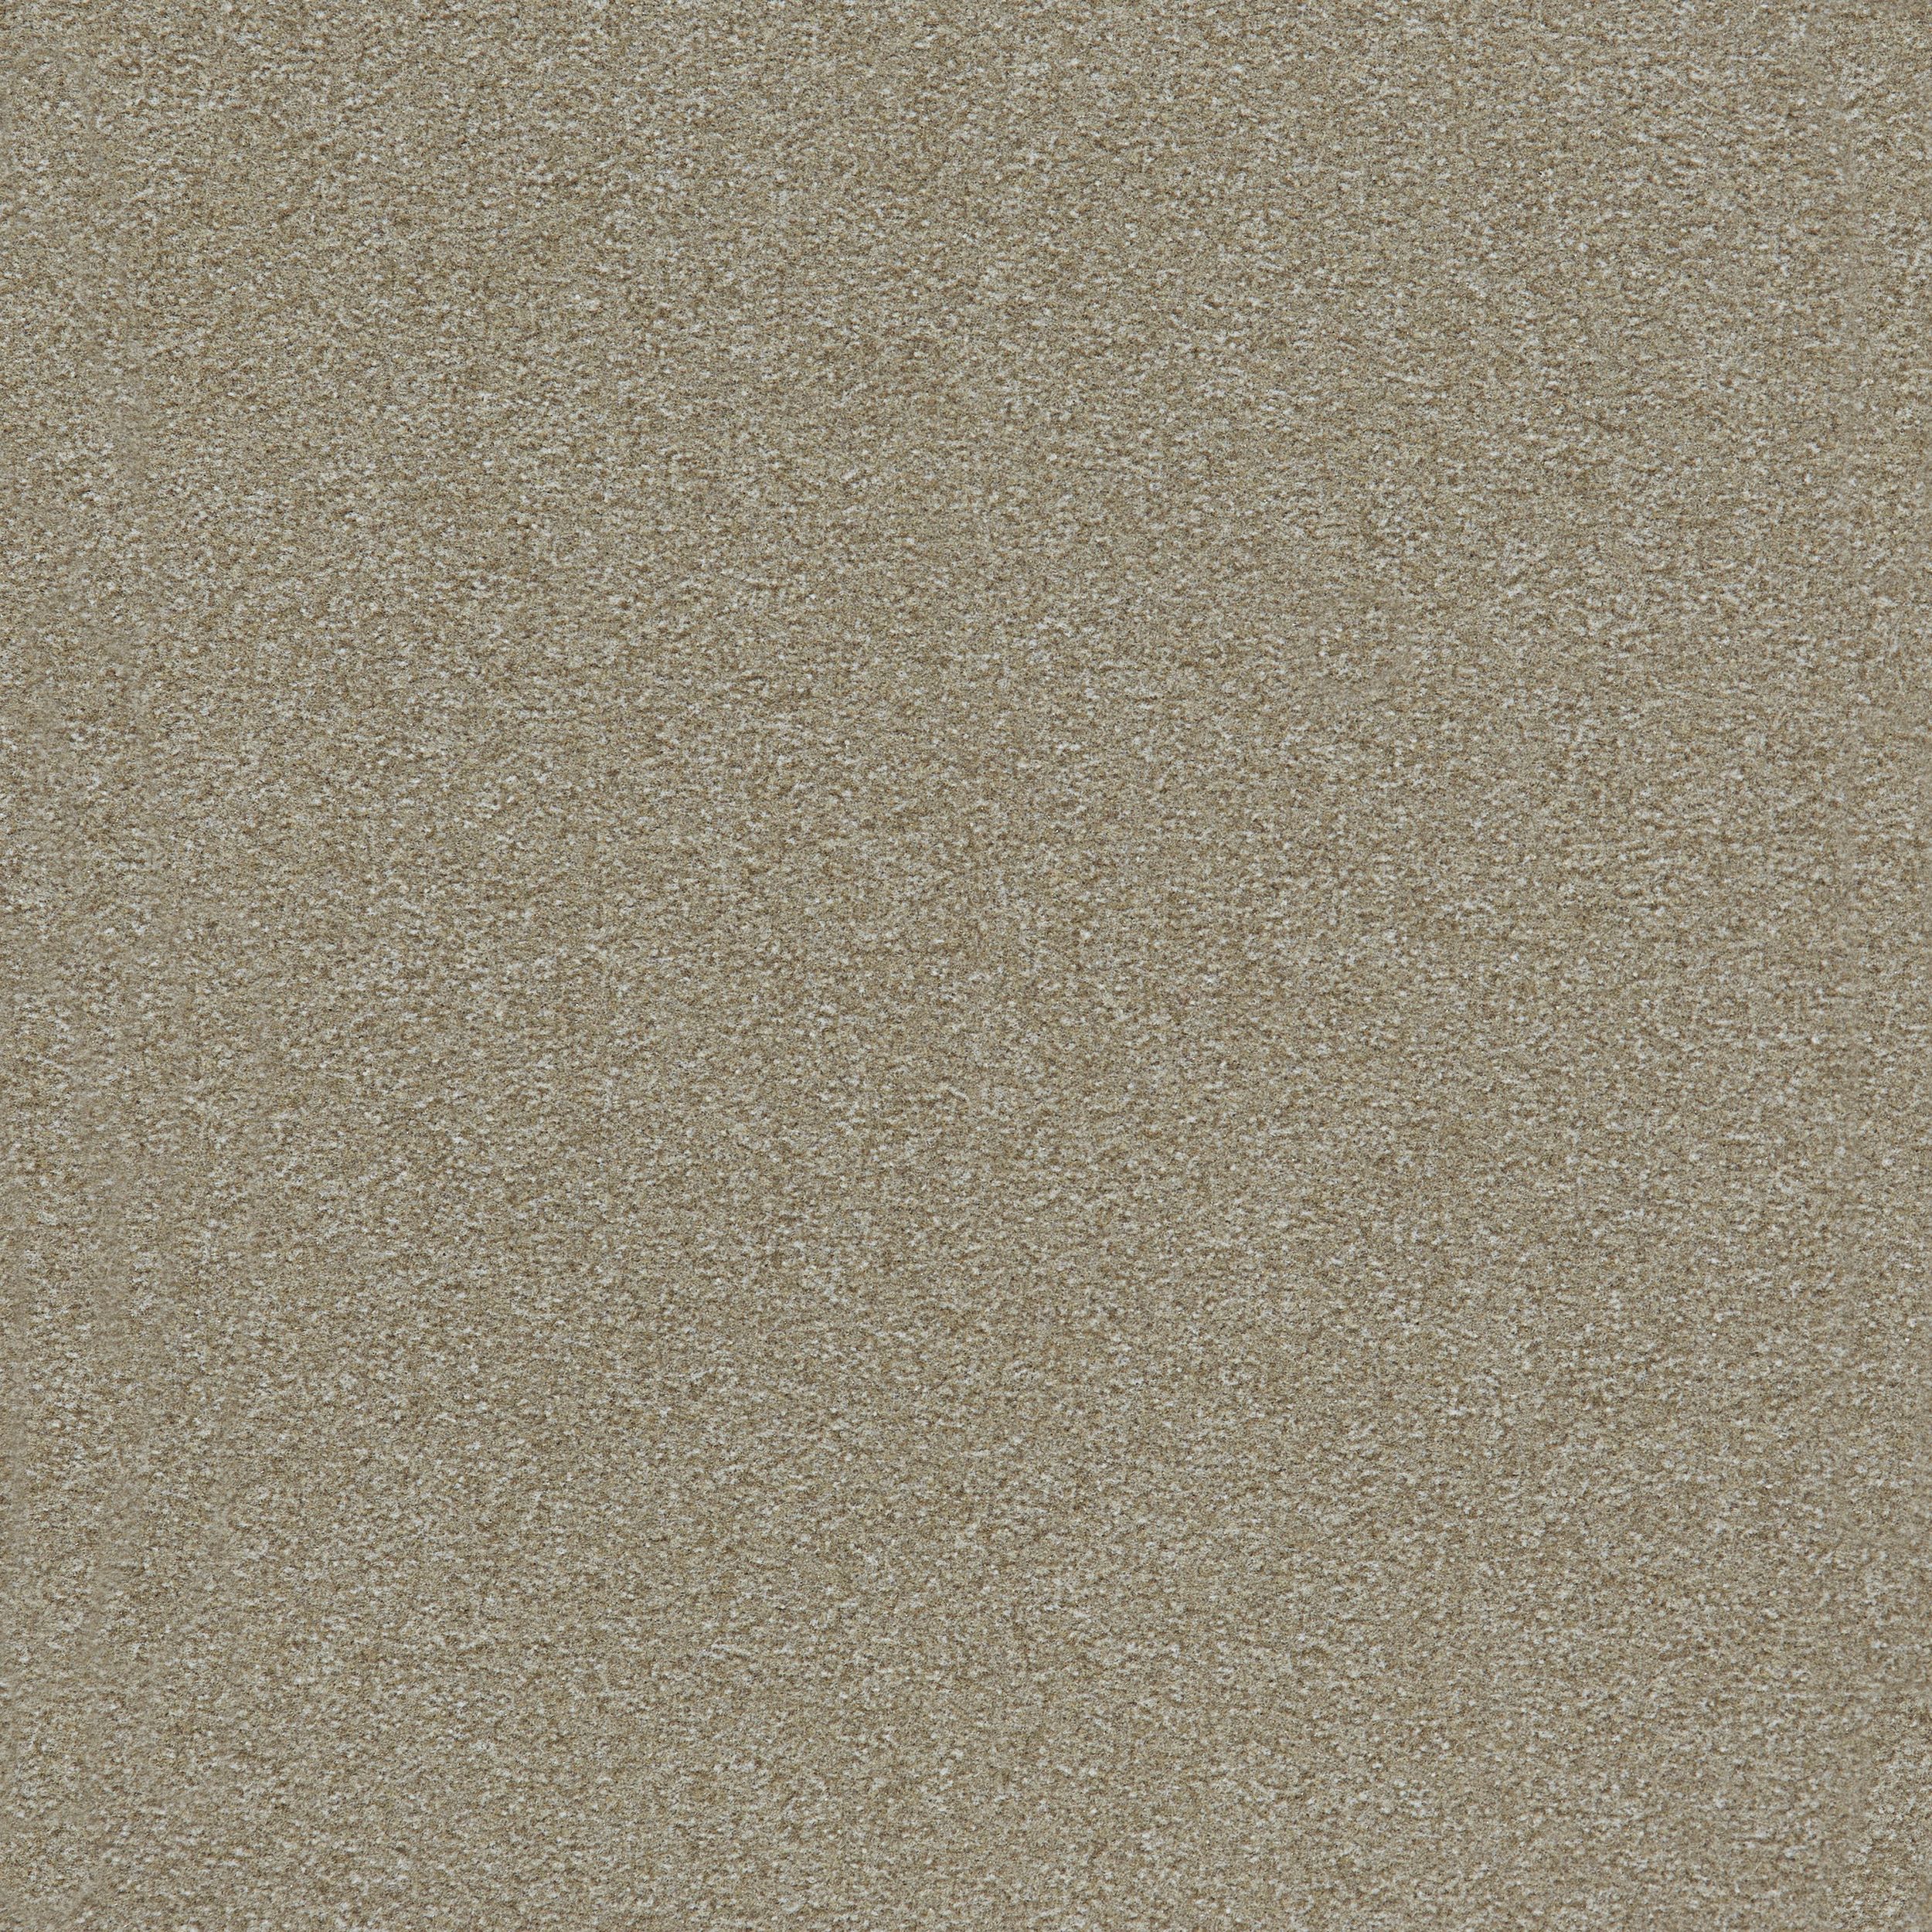 Heuga 725 Carpet Tile In Oyster afbeeldingnummer 4